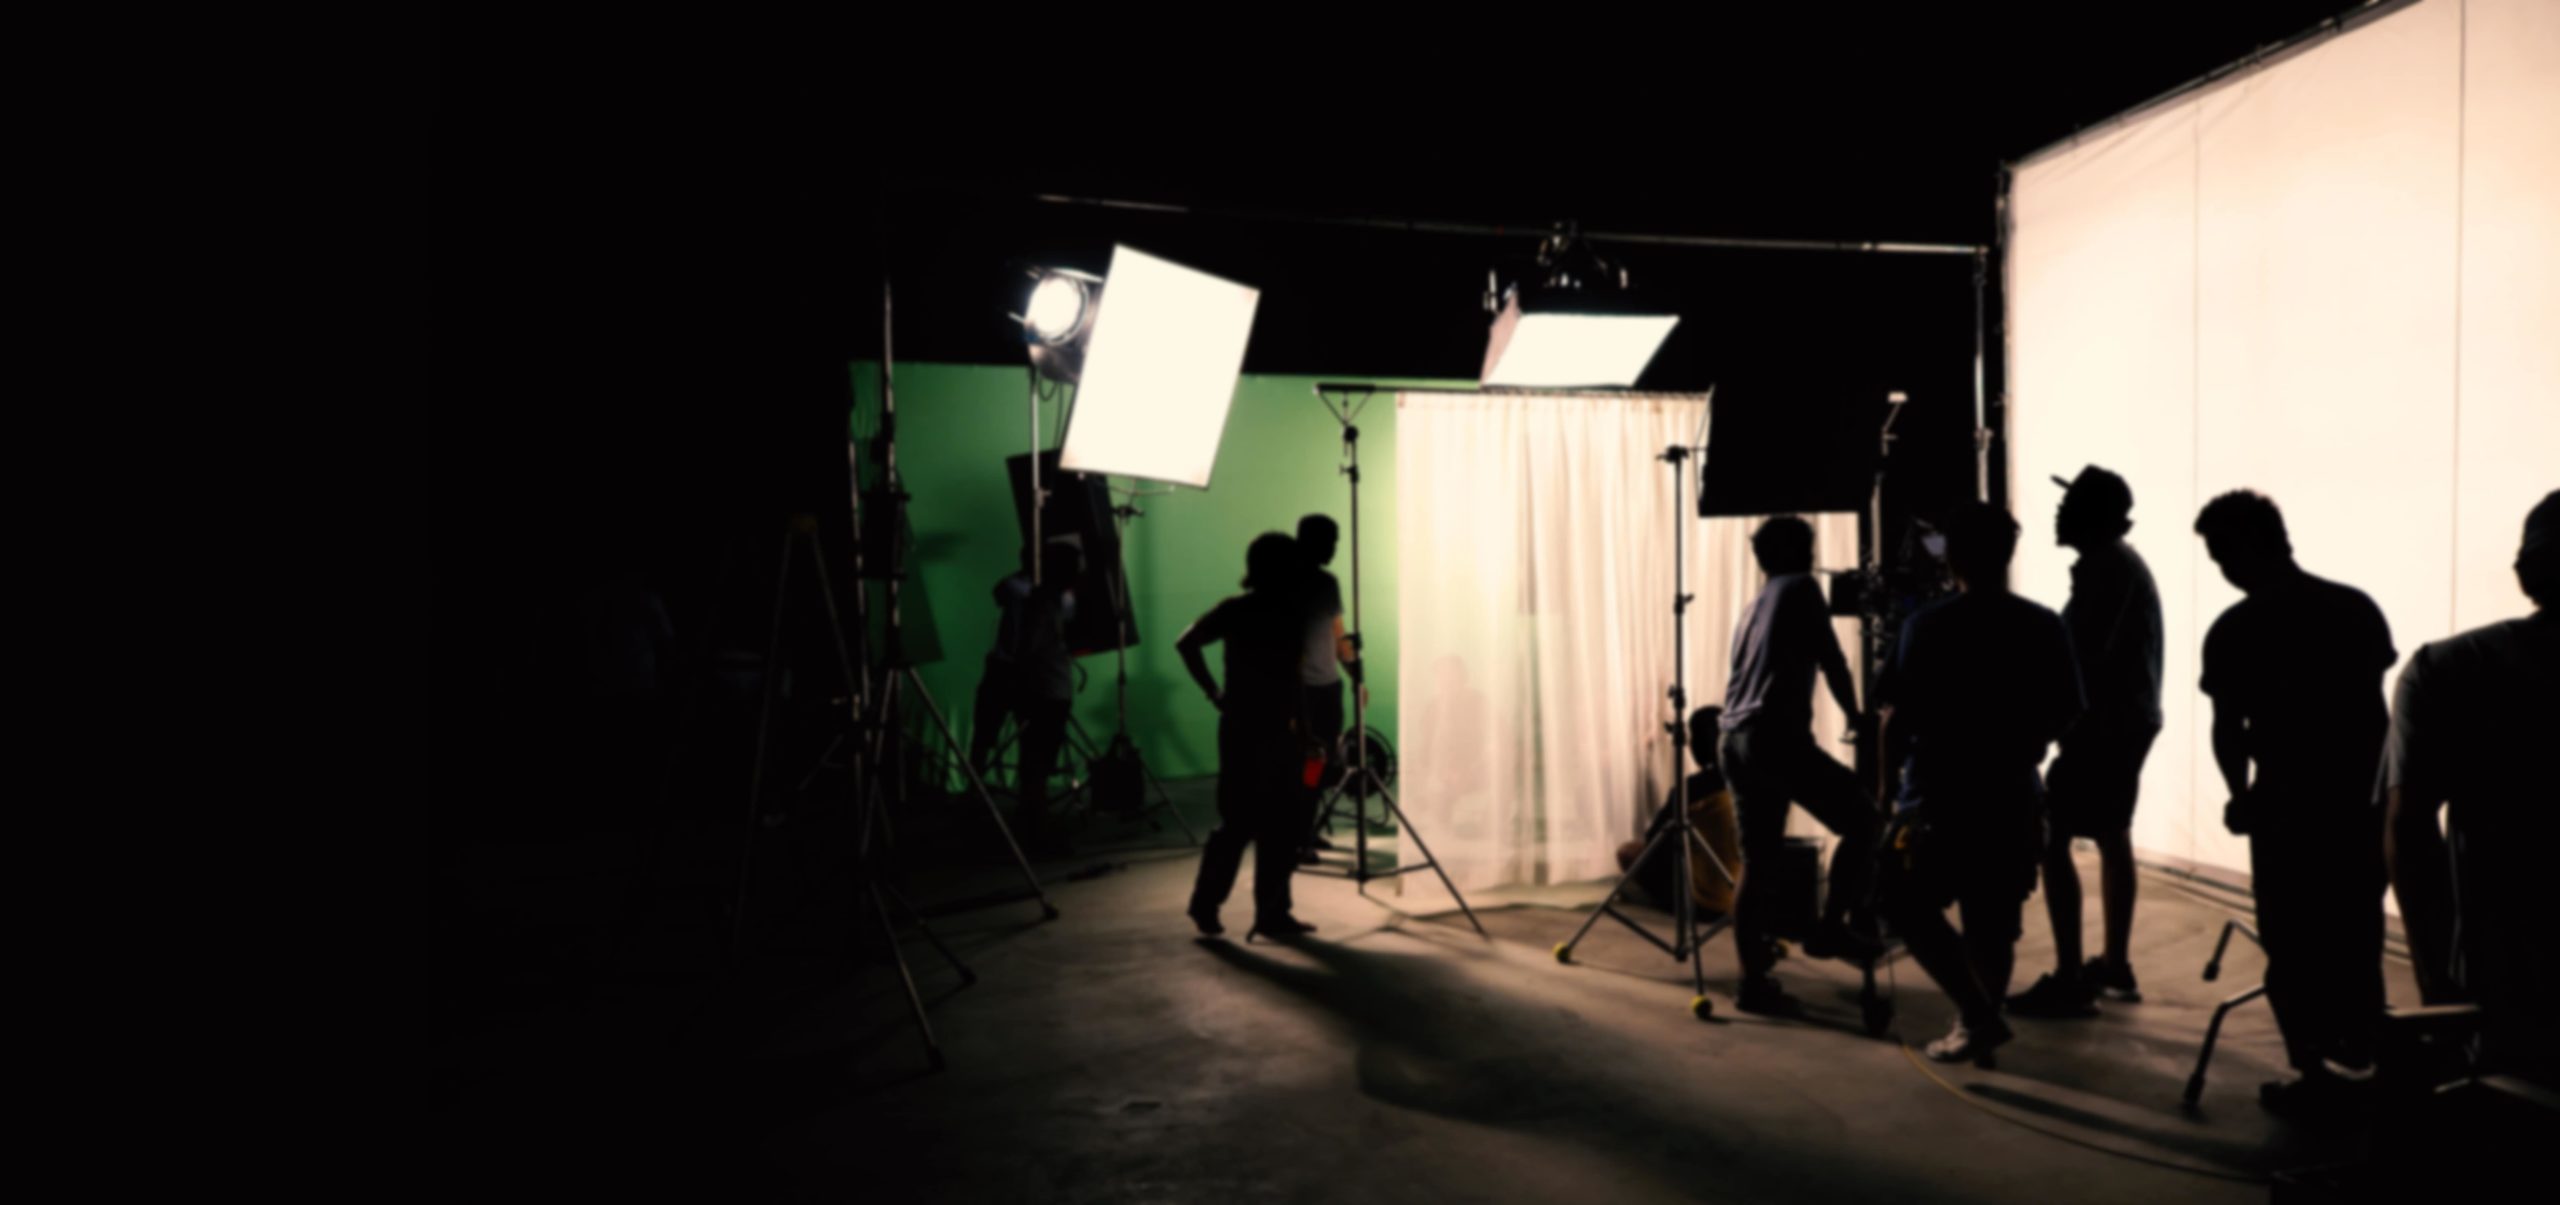 blurred-image-behind-scenes-filming-scaled